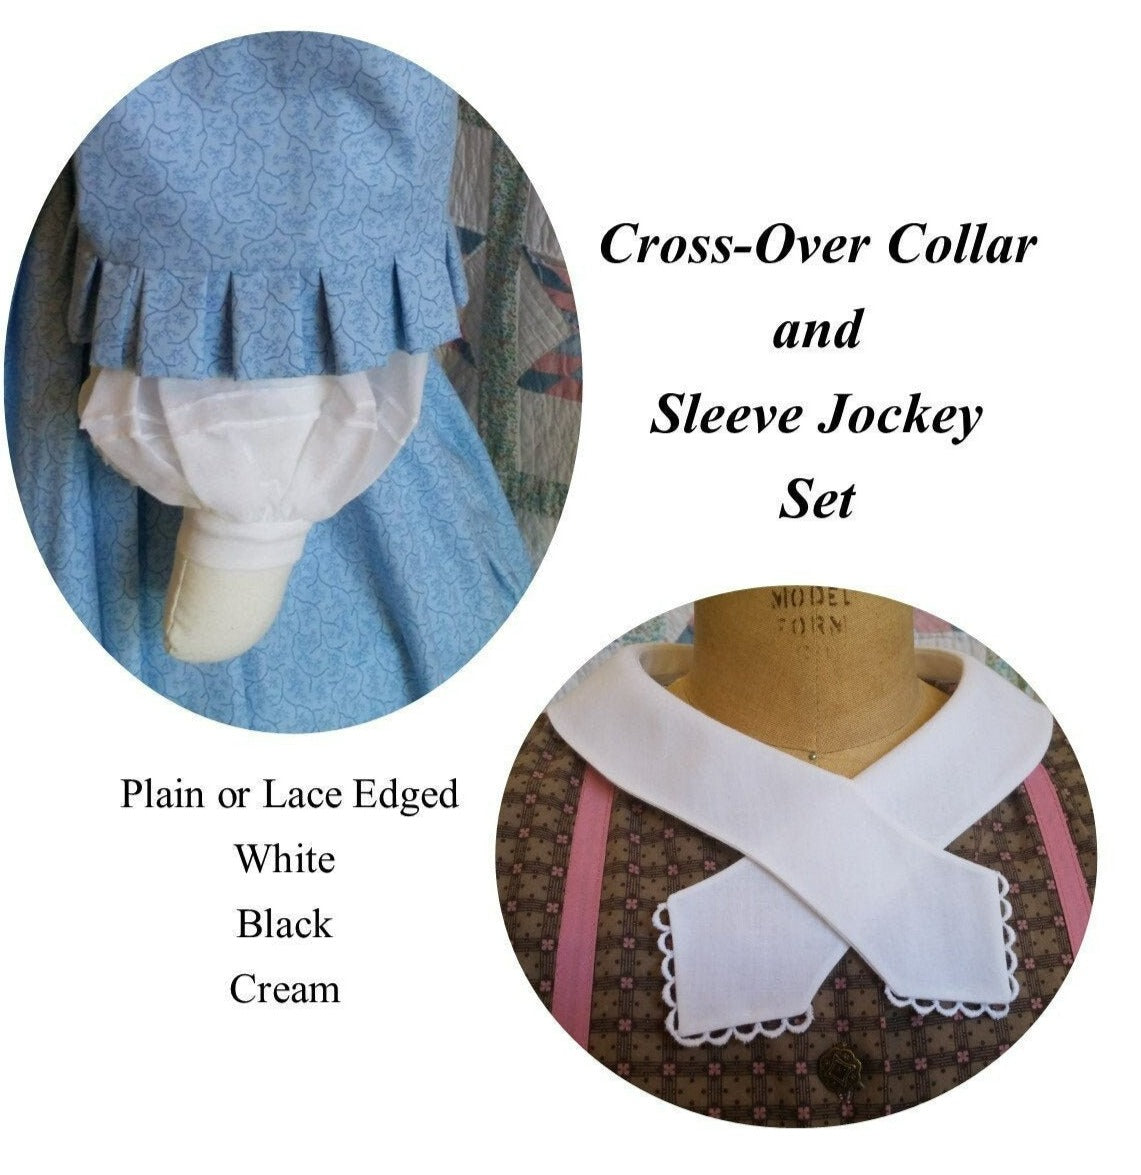 Cotton Cross-over Collar and Sleeve Jockey - Undersleeve Set-white, cream or black - 19th Century Victorian, Edwardian